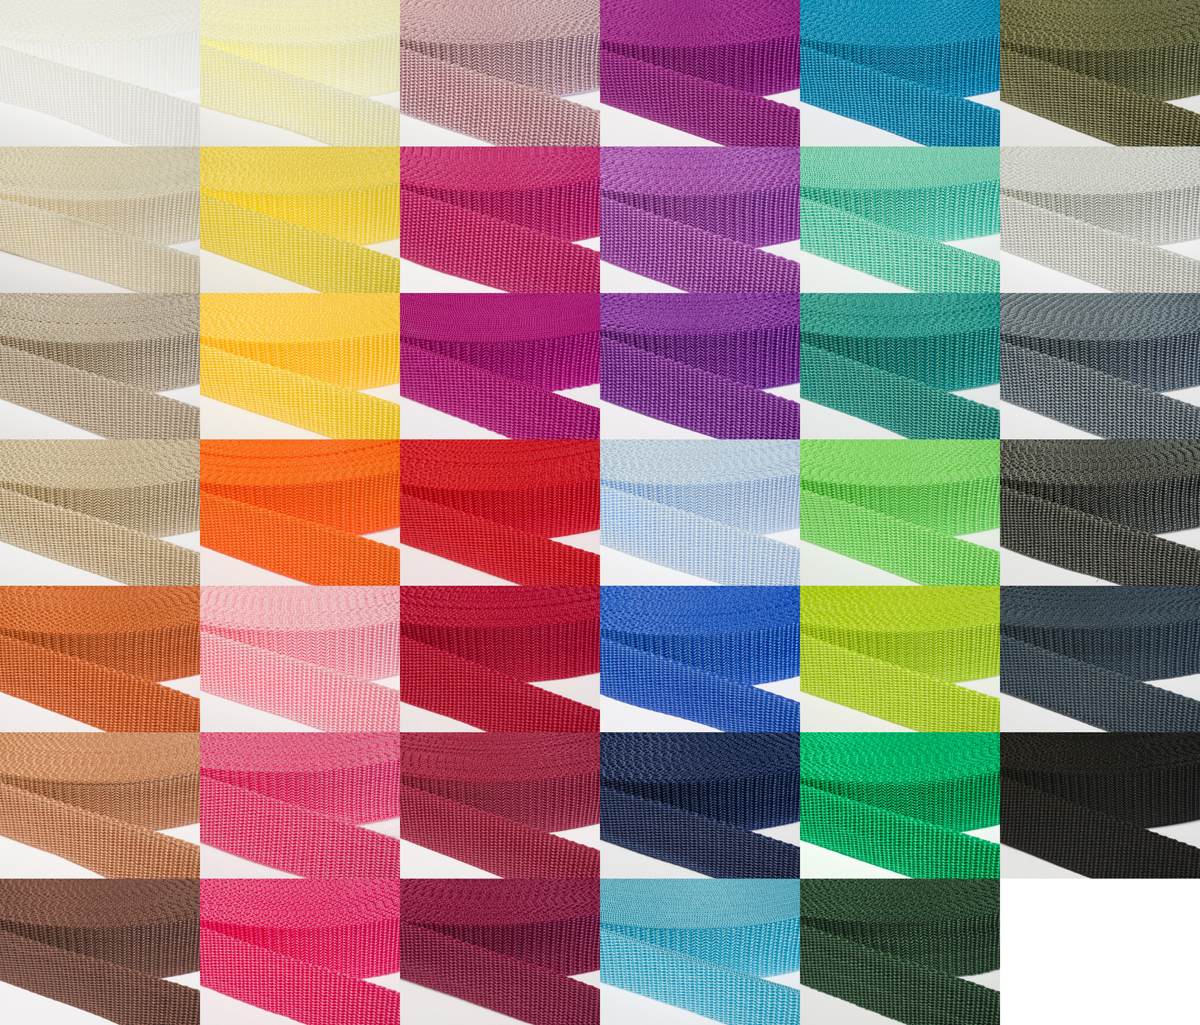 Gurtband 30mm breit aus Polypropylen in 41 Farben 21 - dunkelrot 50 Meter